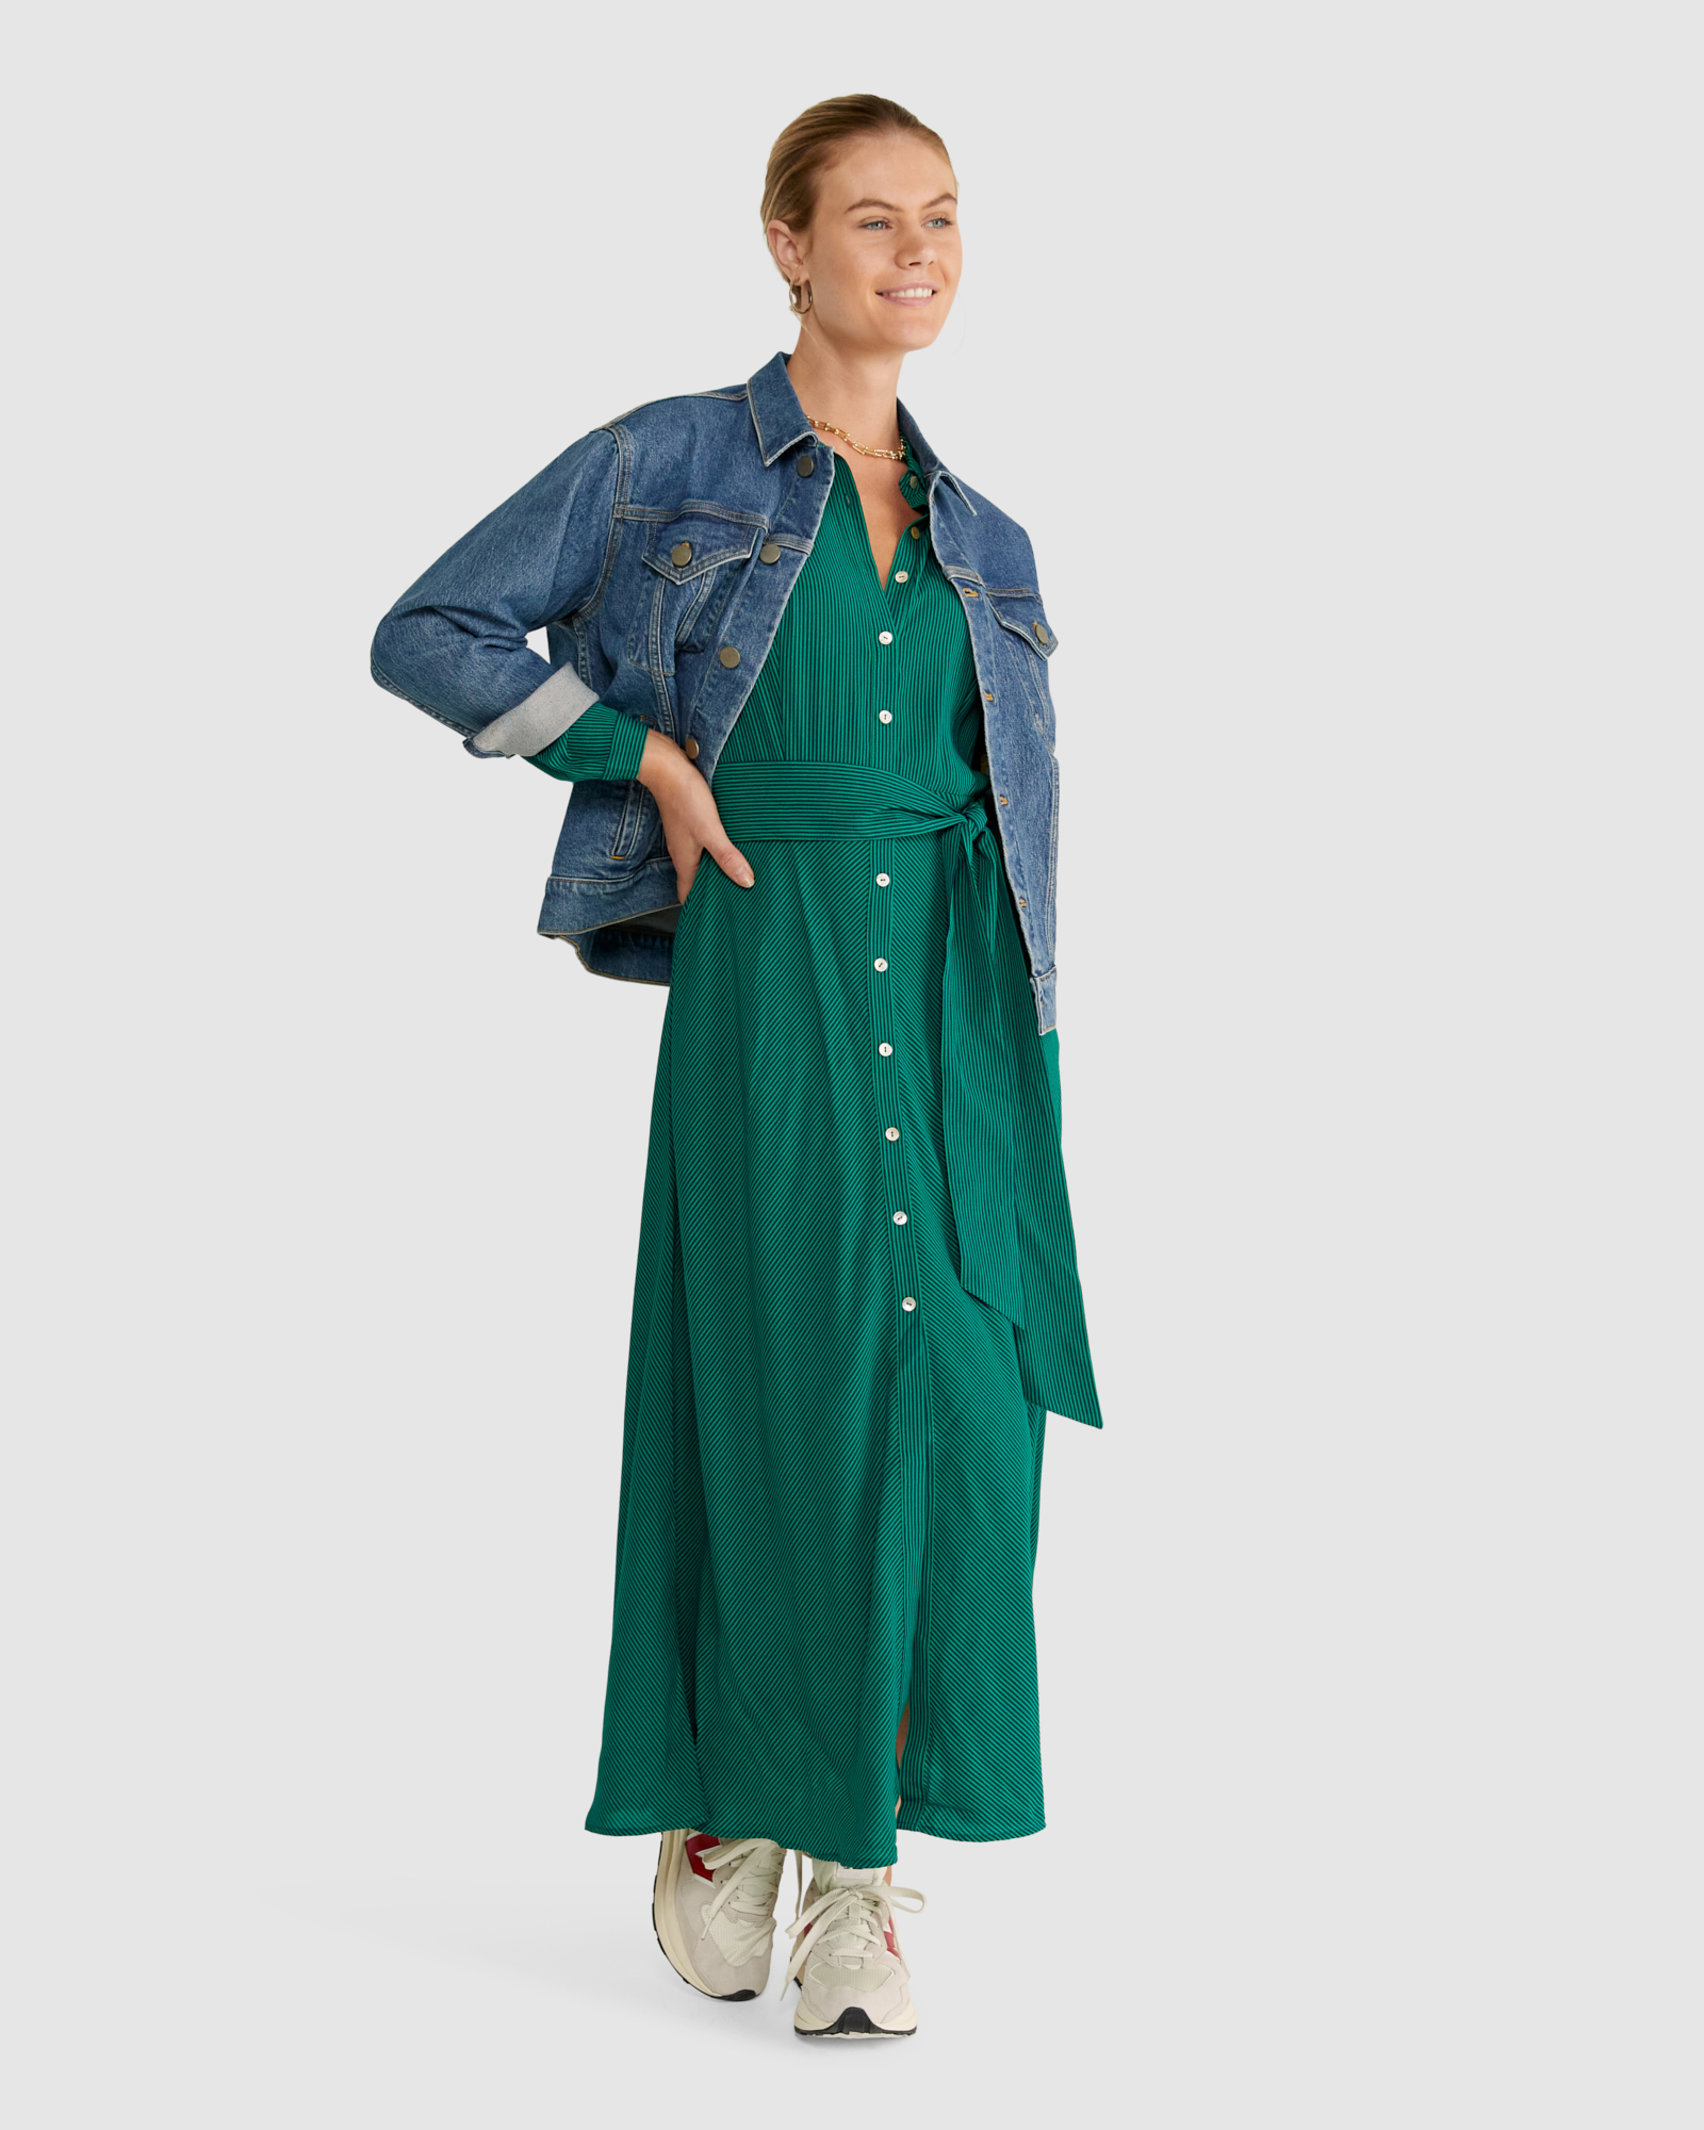 Hildi Heritage Dress in NAVY/GREEN